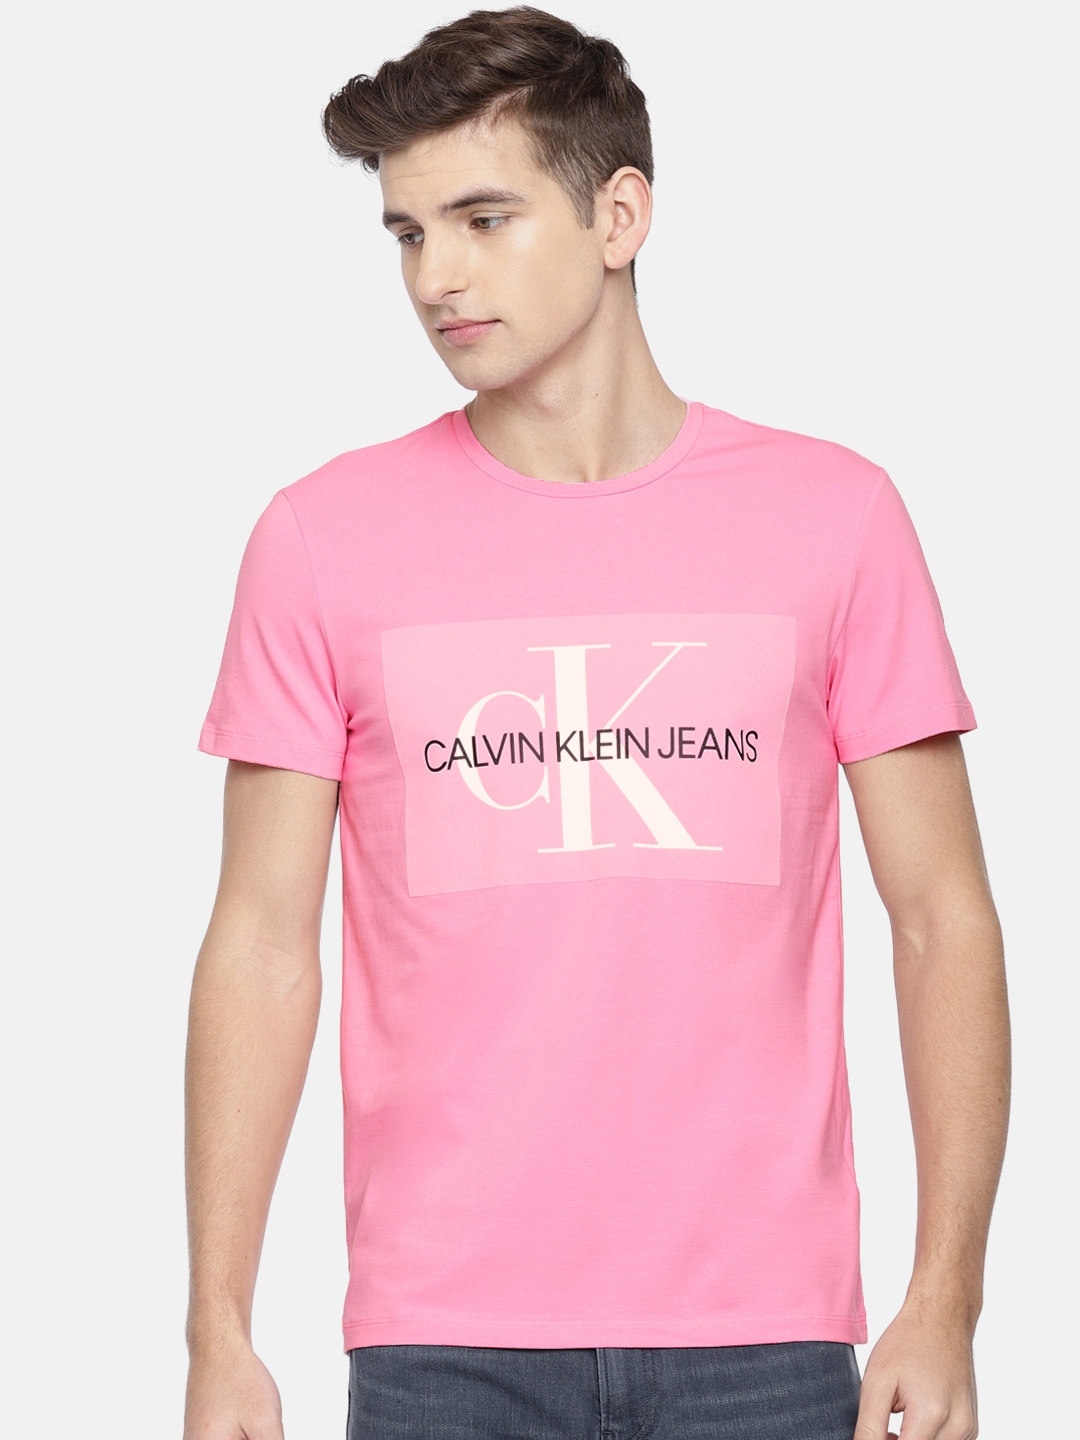 Anzai ulv kampagne Buy Calvin Klein Jeans Men Pink Printed Round Neck T Shirt - Tshirts for Men  8516765 | Myntra